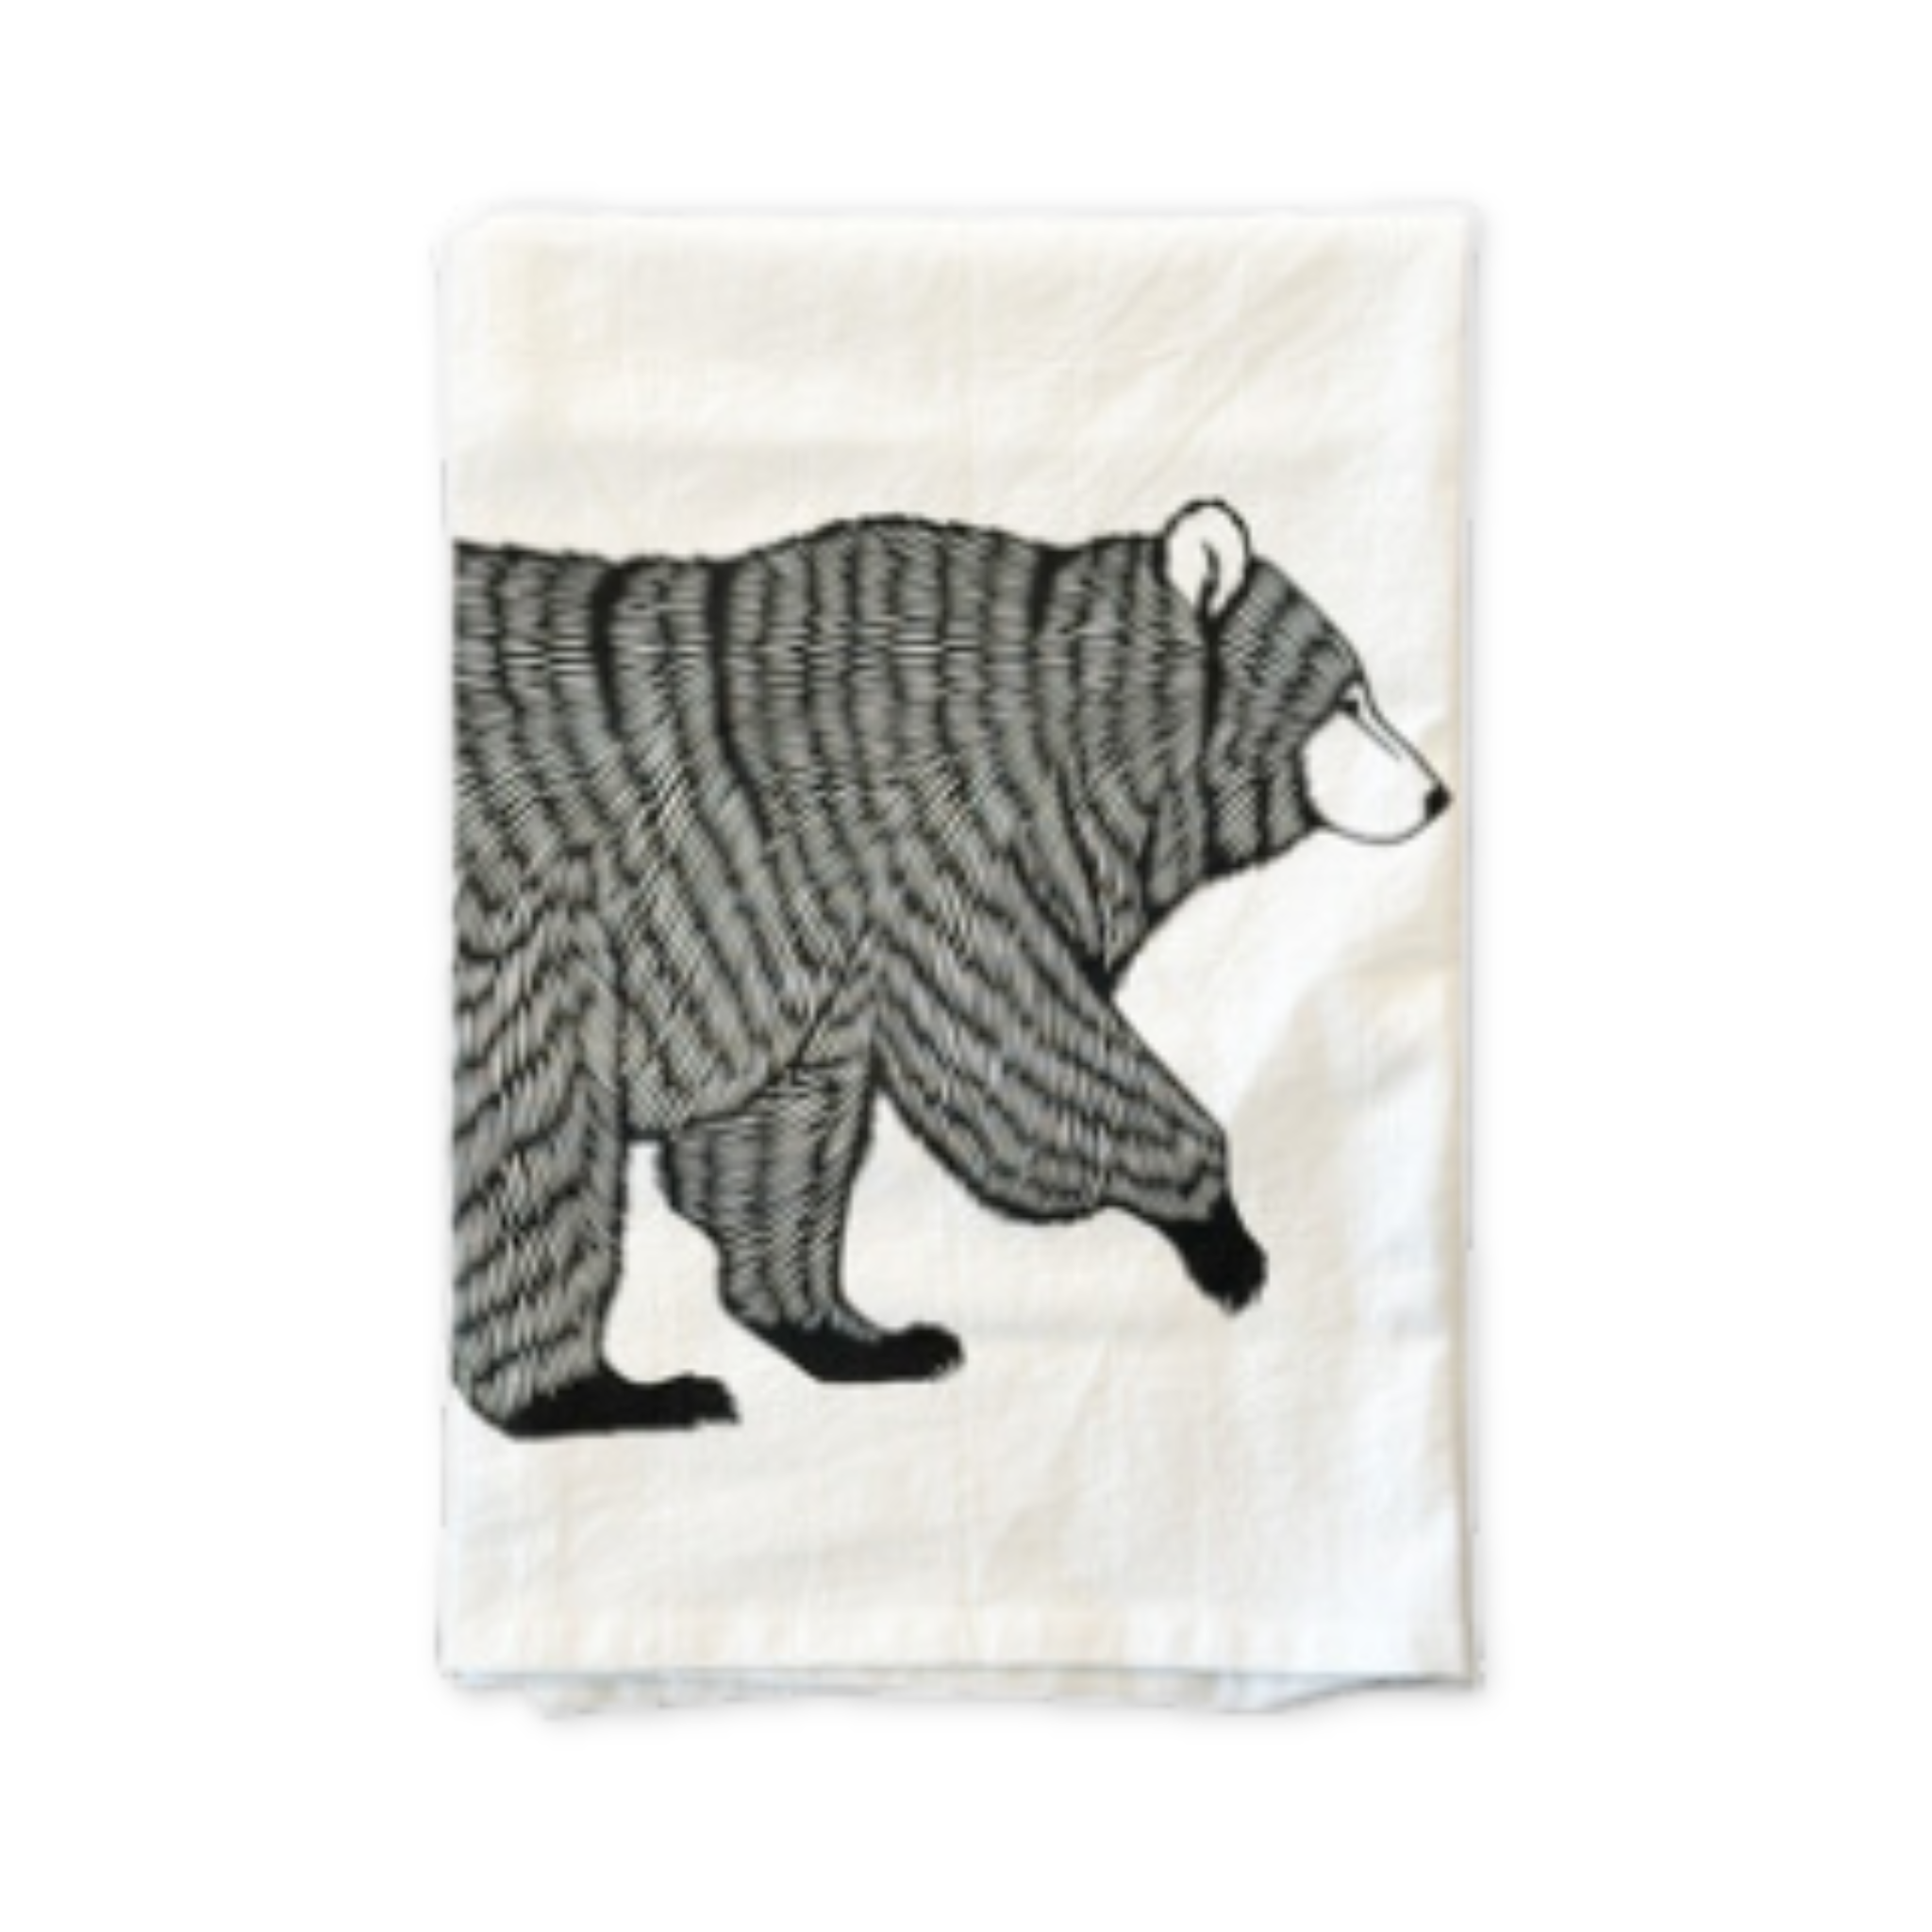 flour sack cotton tea towel featuring a hand printed black bear design